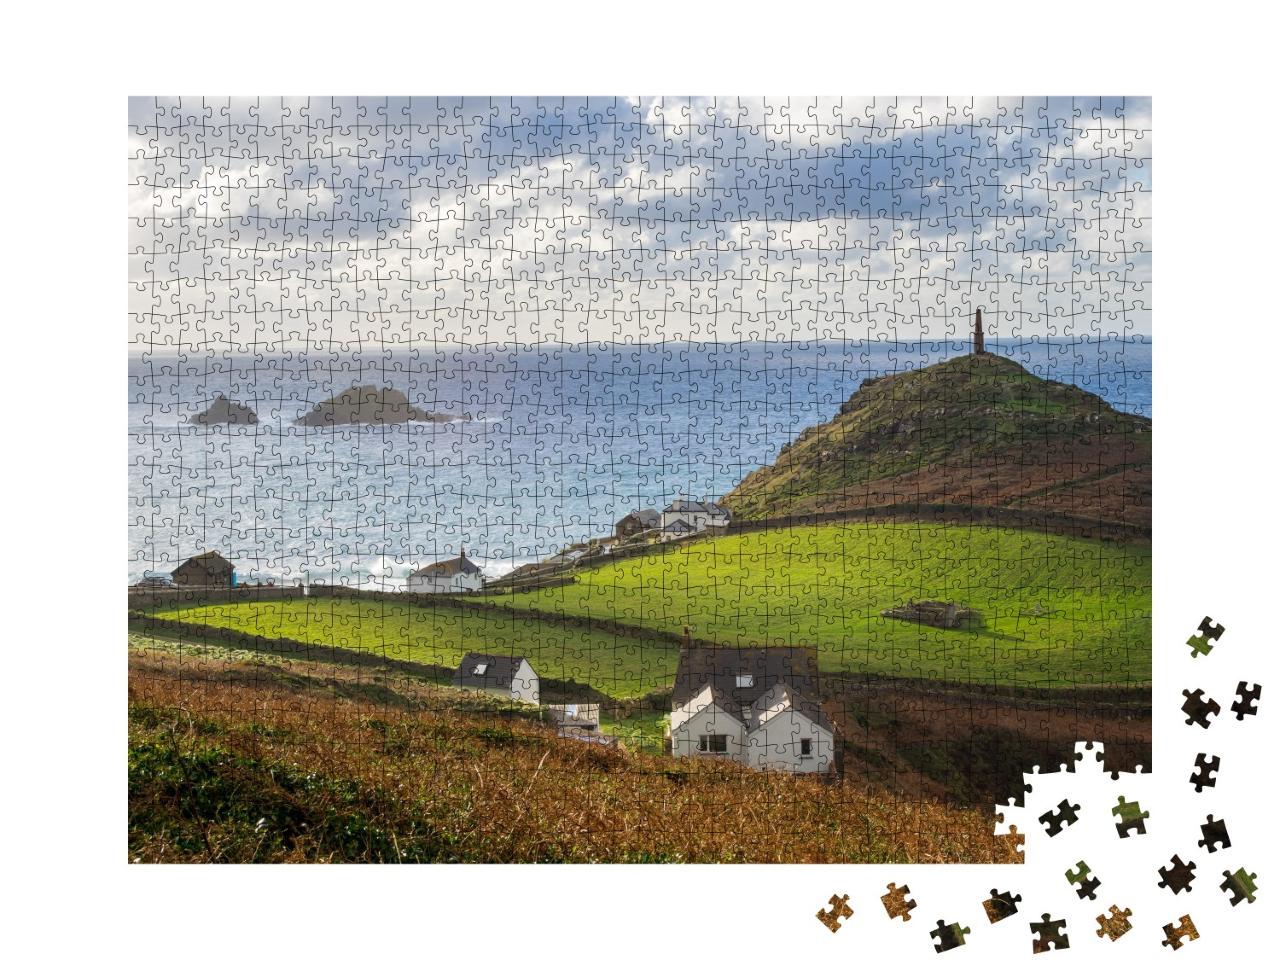 Puzzle de 1000 pièces « Pointe du Cap Cornwall, Angleterre, Europe »